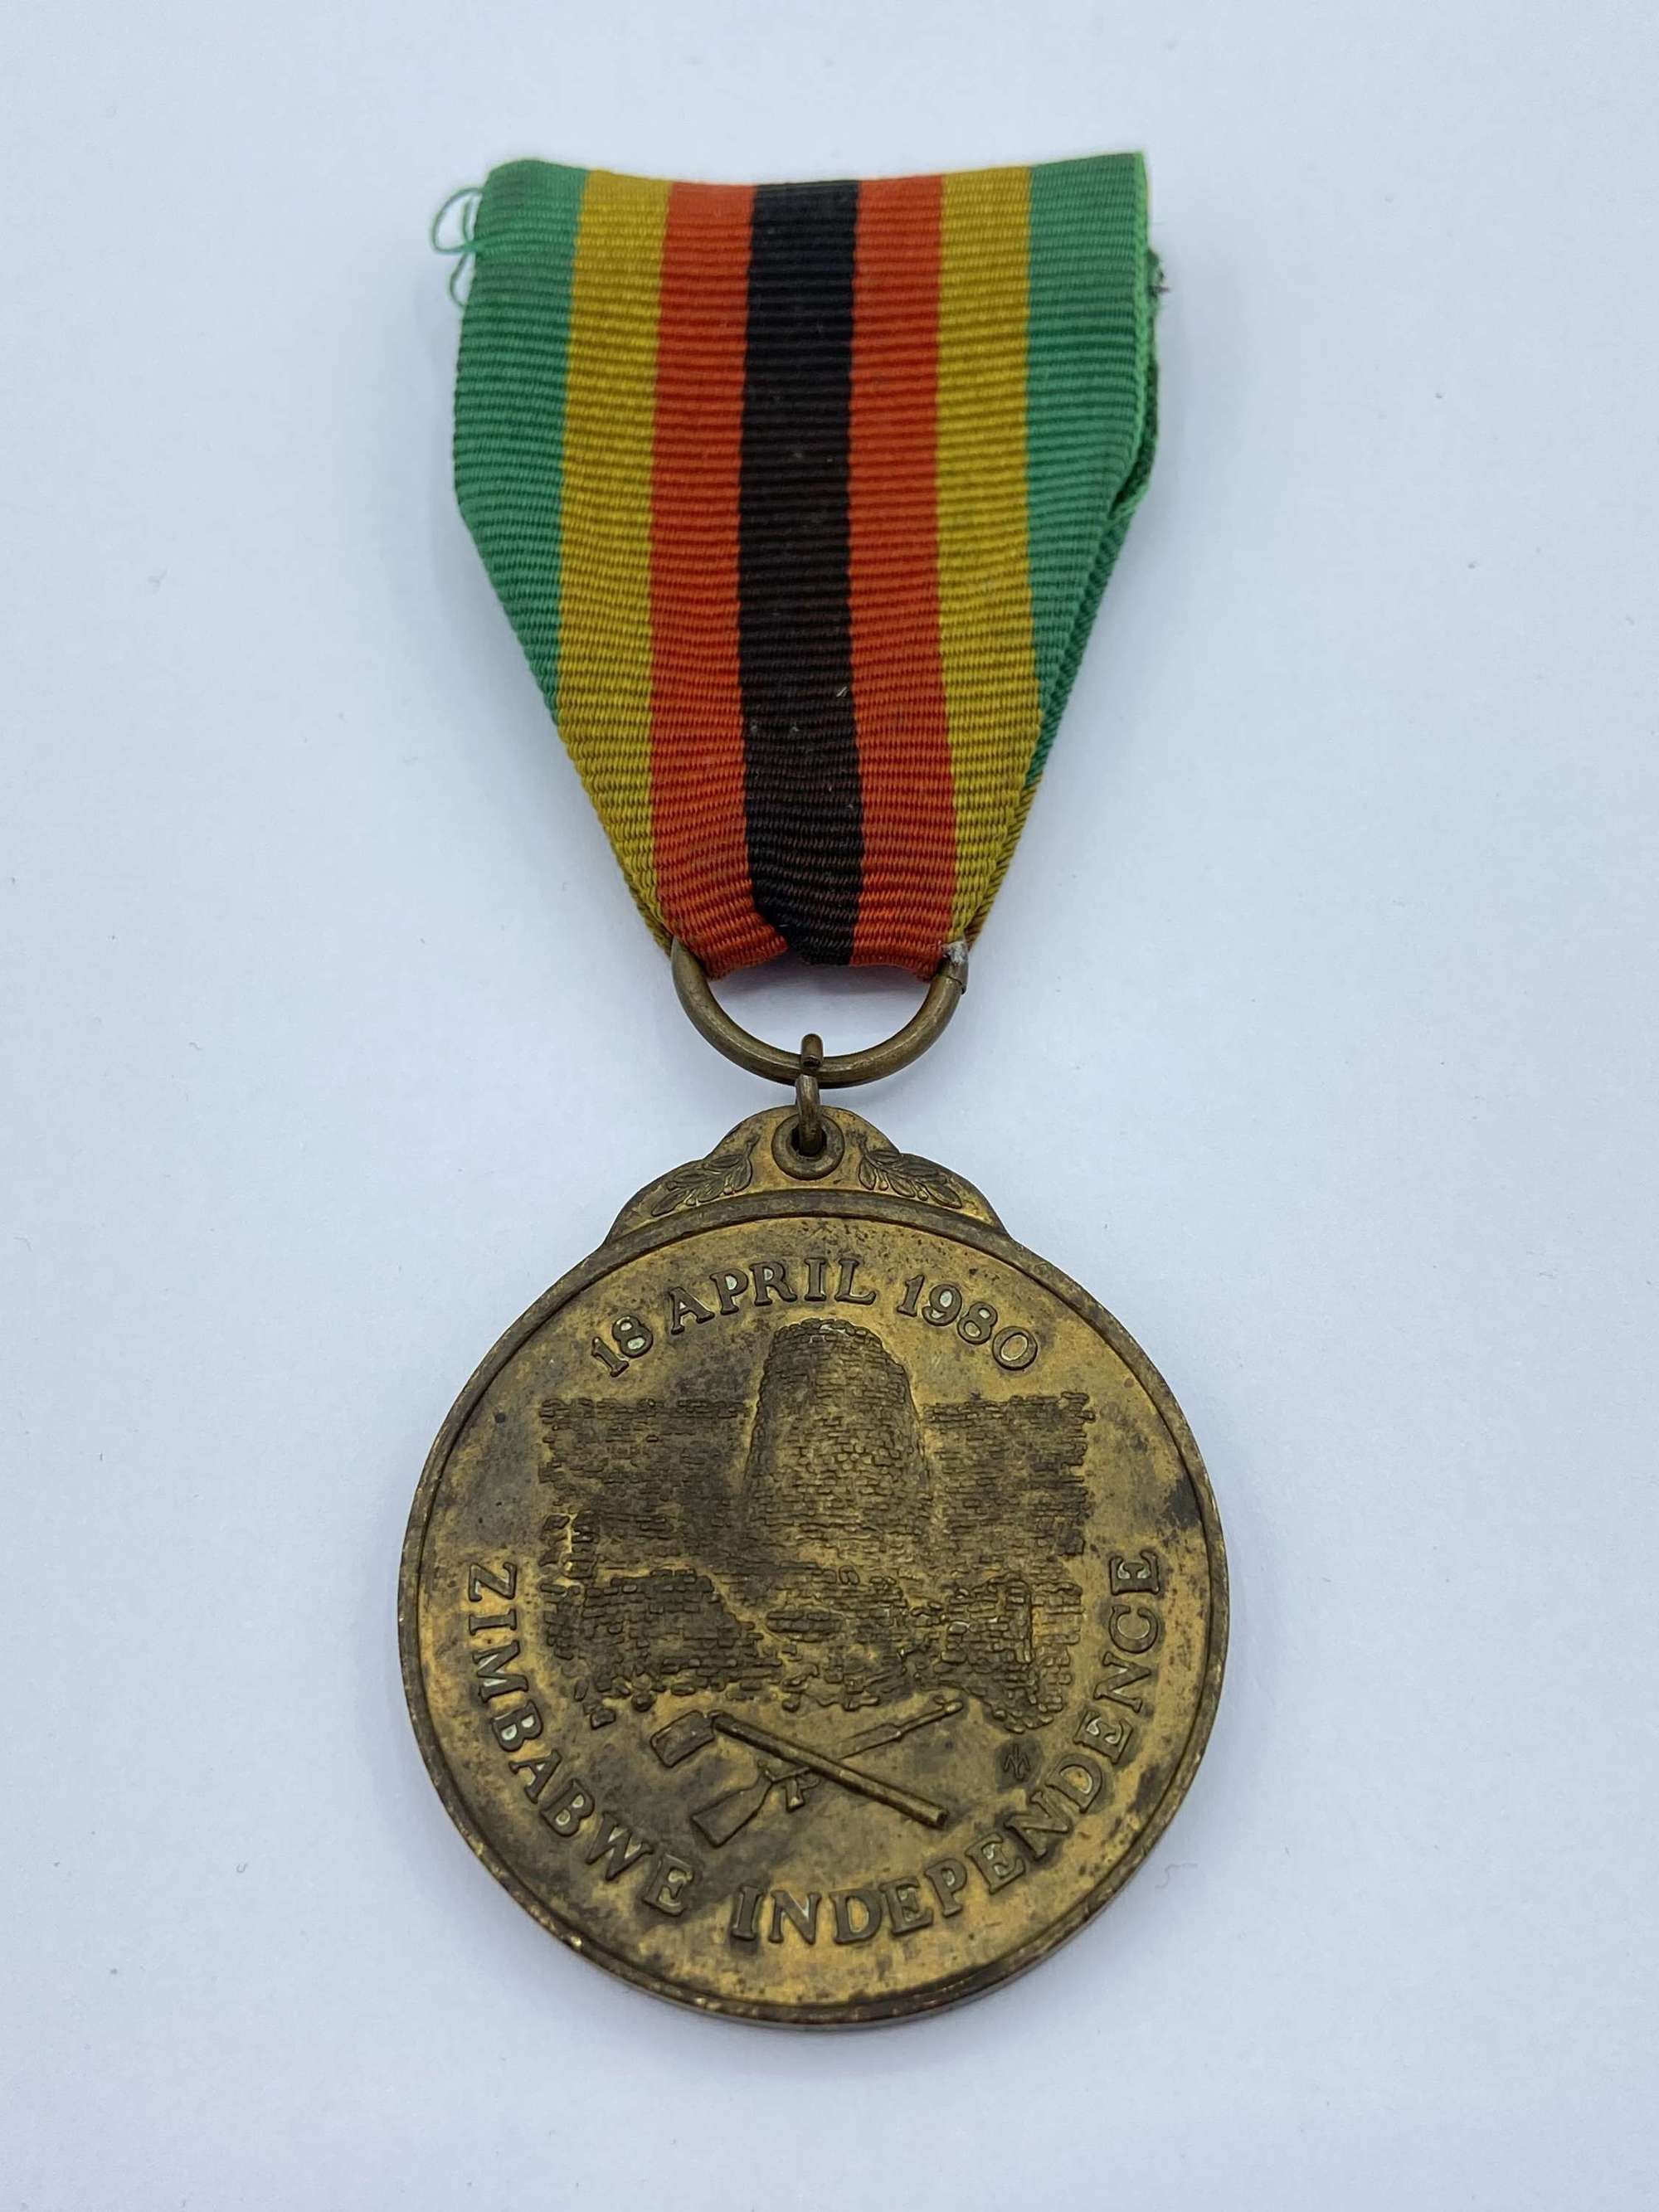 Rhodesian War Zimbabwean Independence 1980 Medal Marked 01790 On Rim